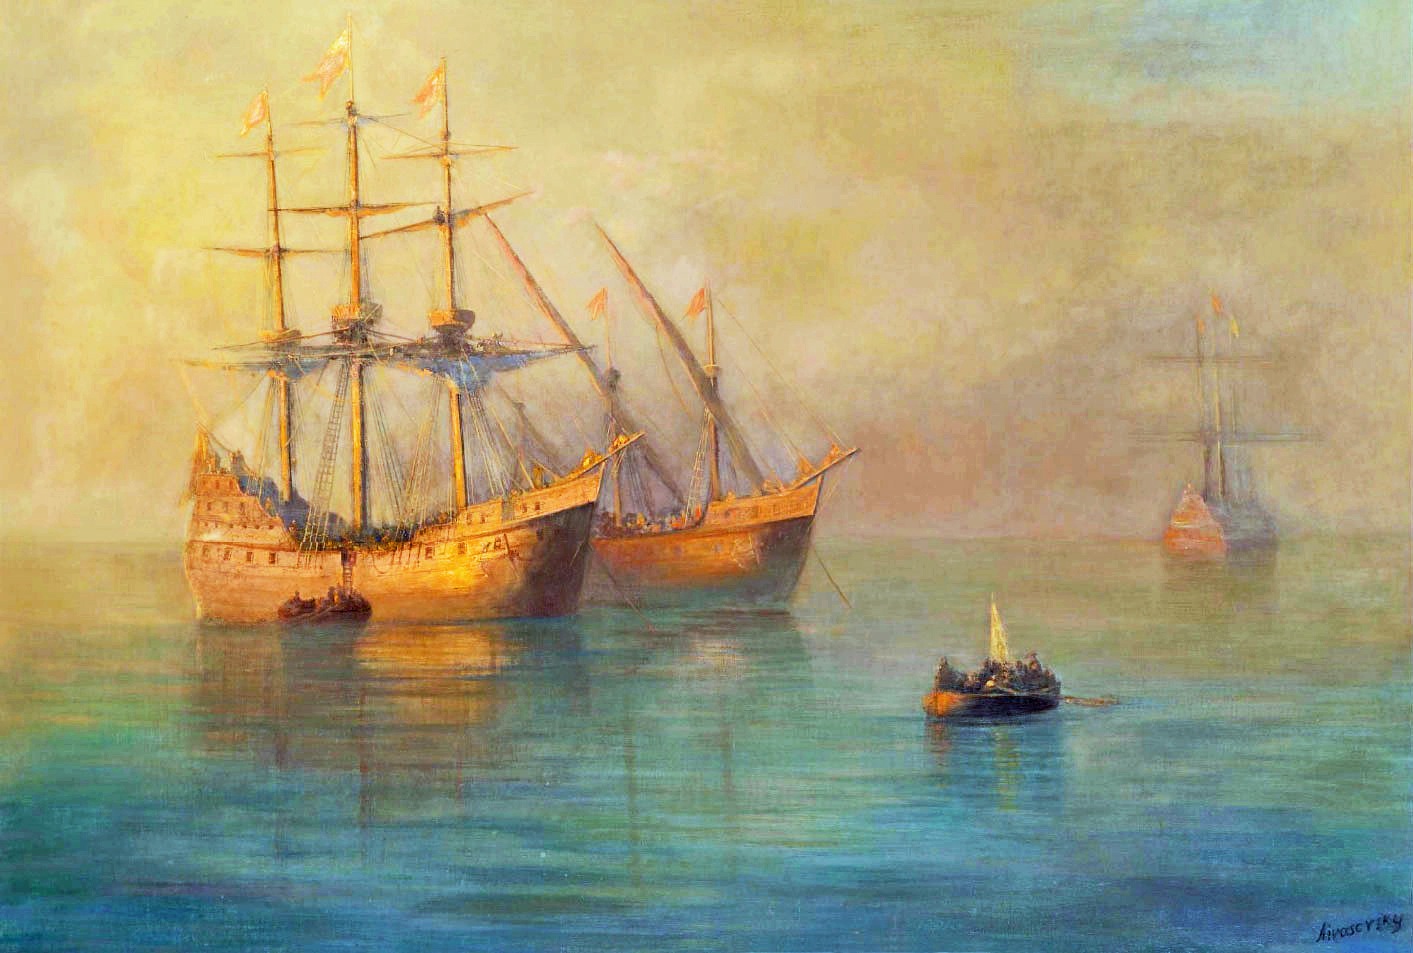 Ivan Constantinovich Aivazovsky, The Arrival Of Columbus’ Fleet